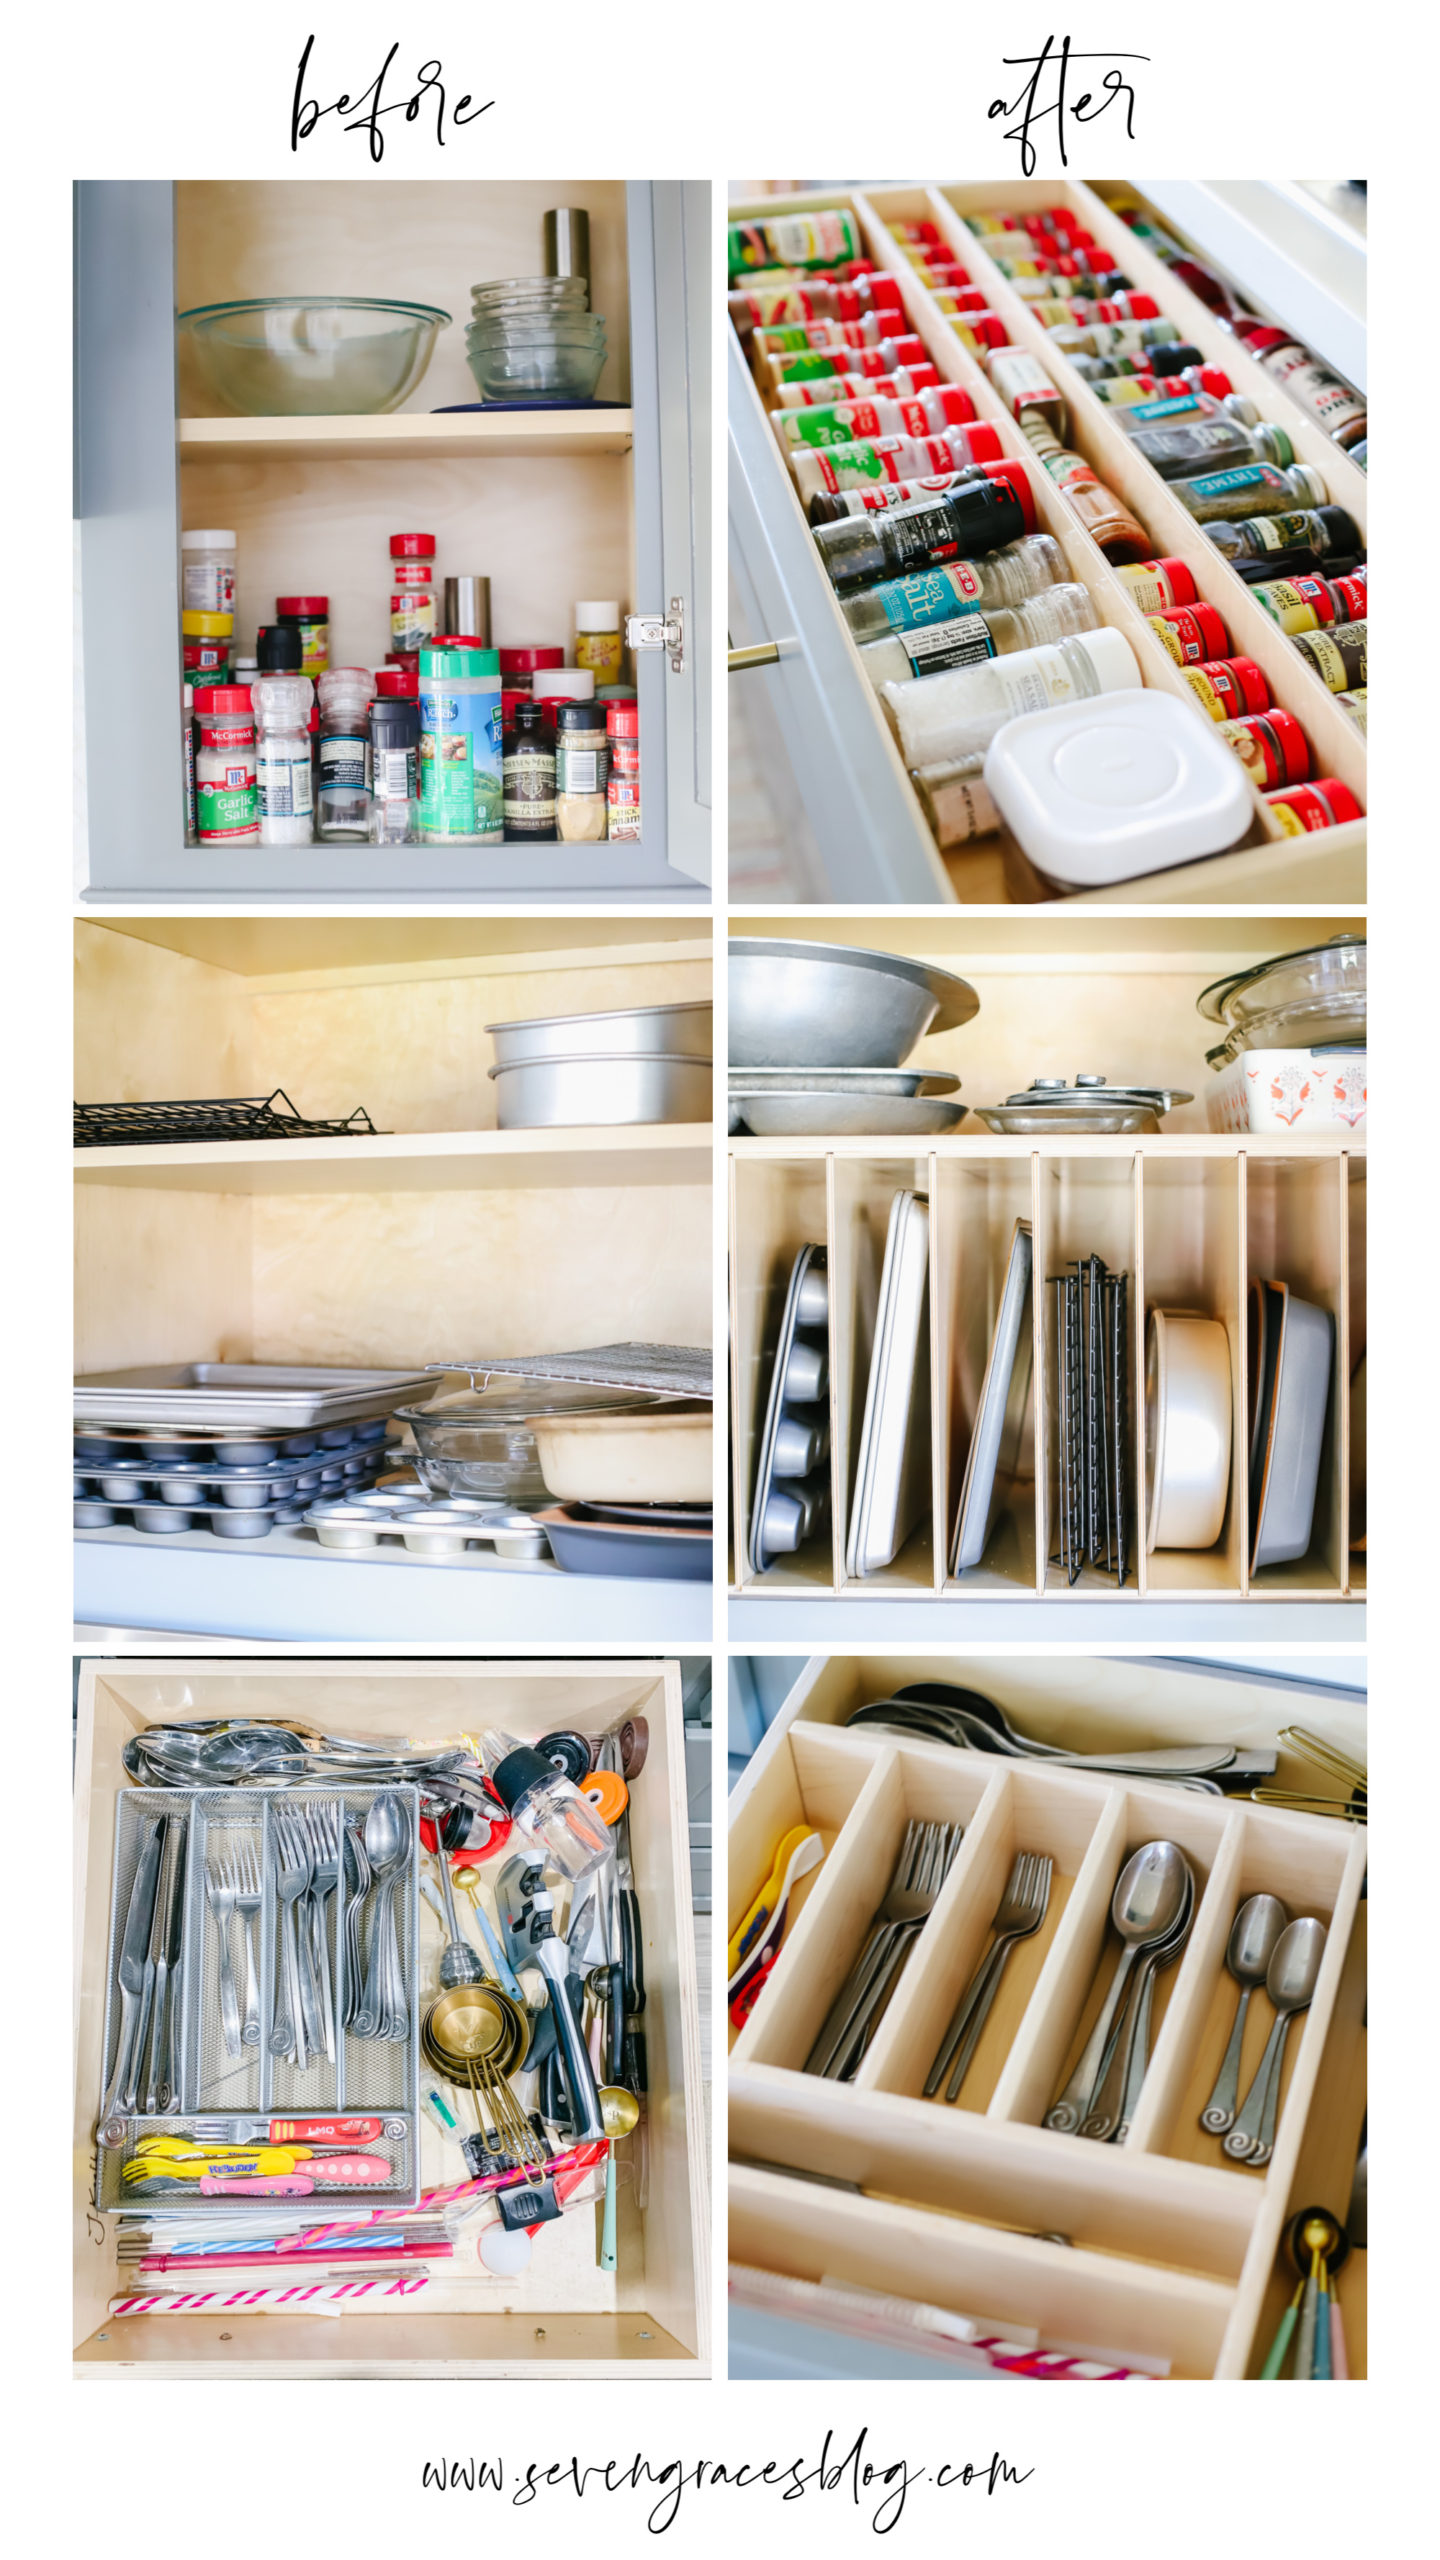 Kitchen Organization with ShelfGenie! The best way to organize and simplify your cabinets and drawers. #ad #MadetoMaximize #DesignforSpace #ShelfEnvy #ShelfGenie